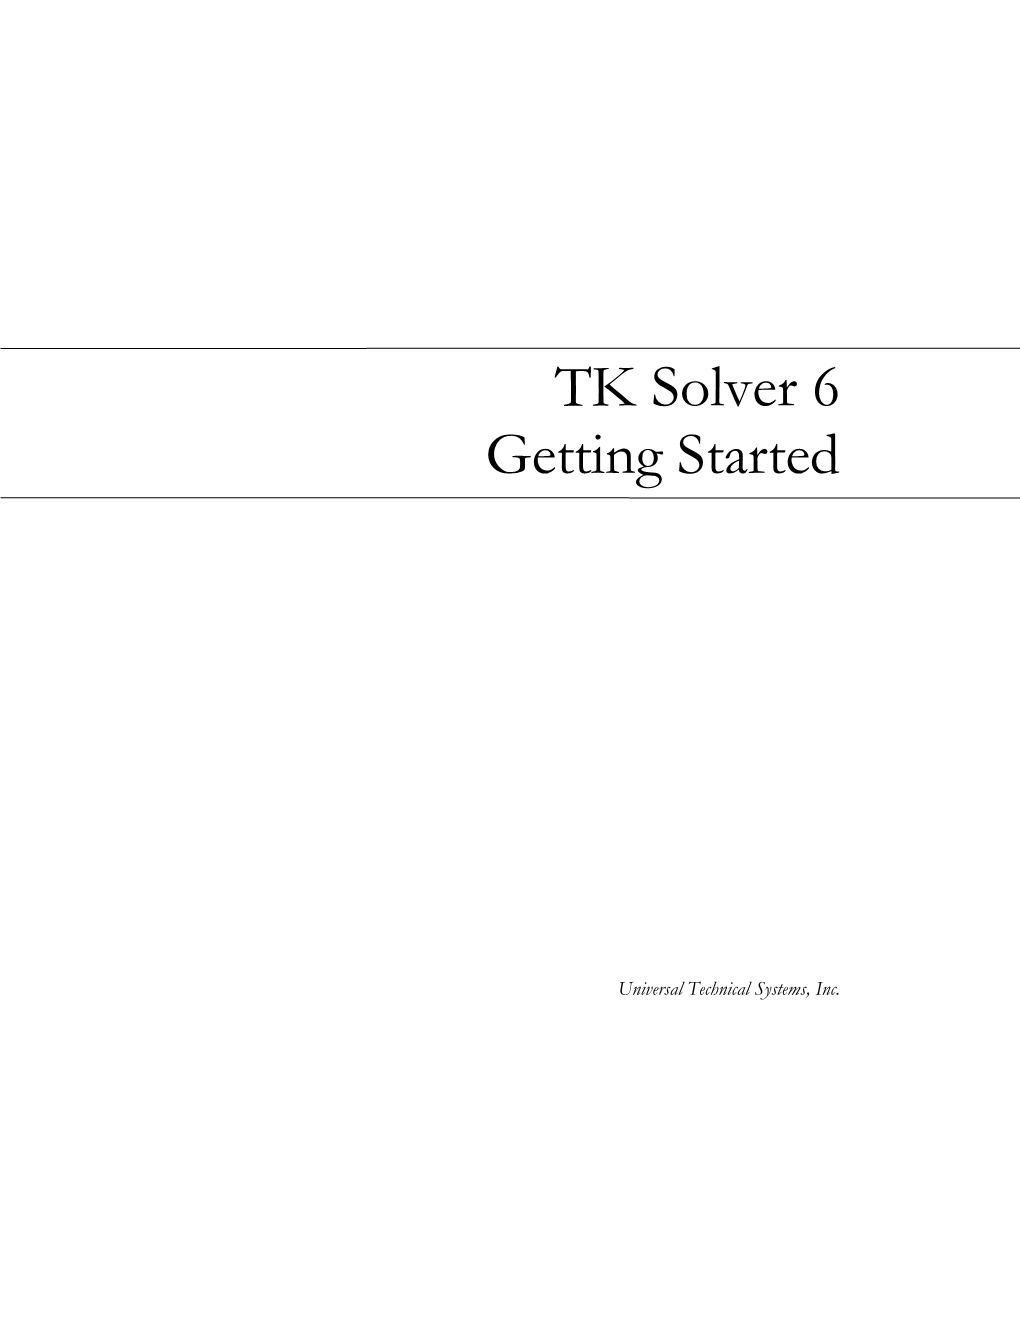 TK Solver 6 Getting Started